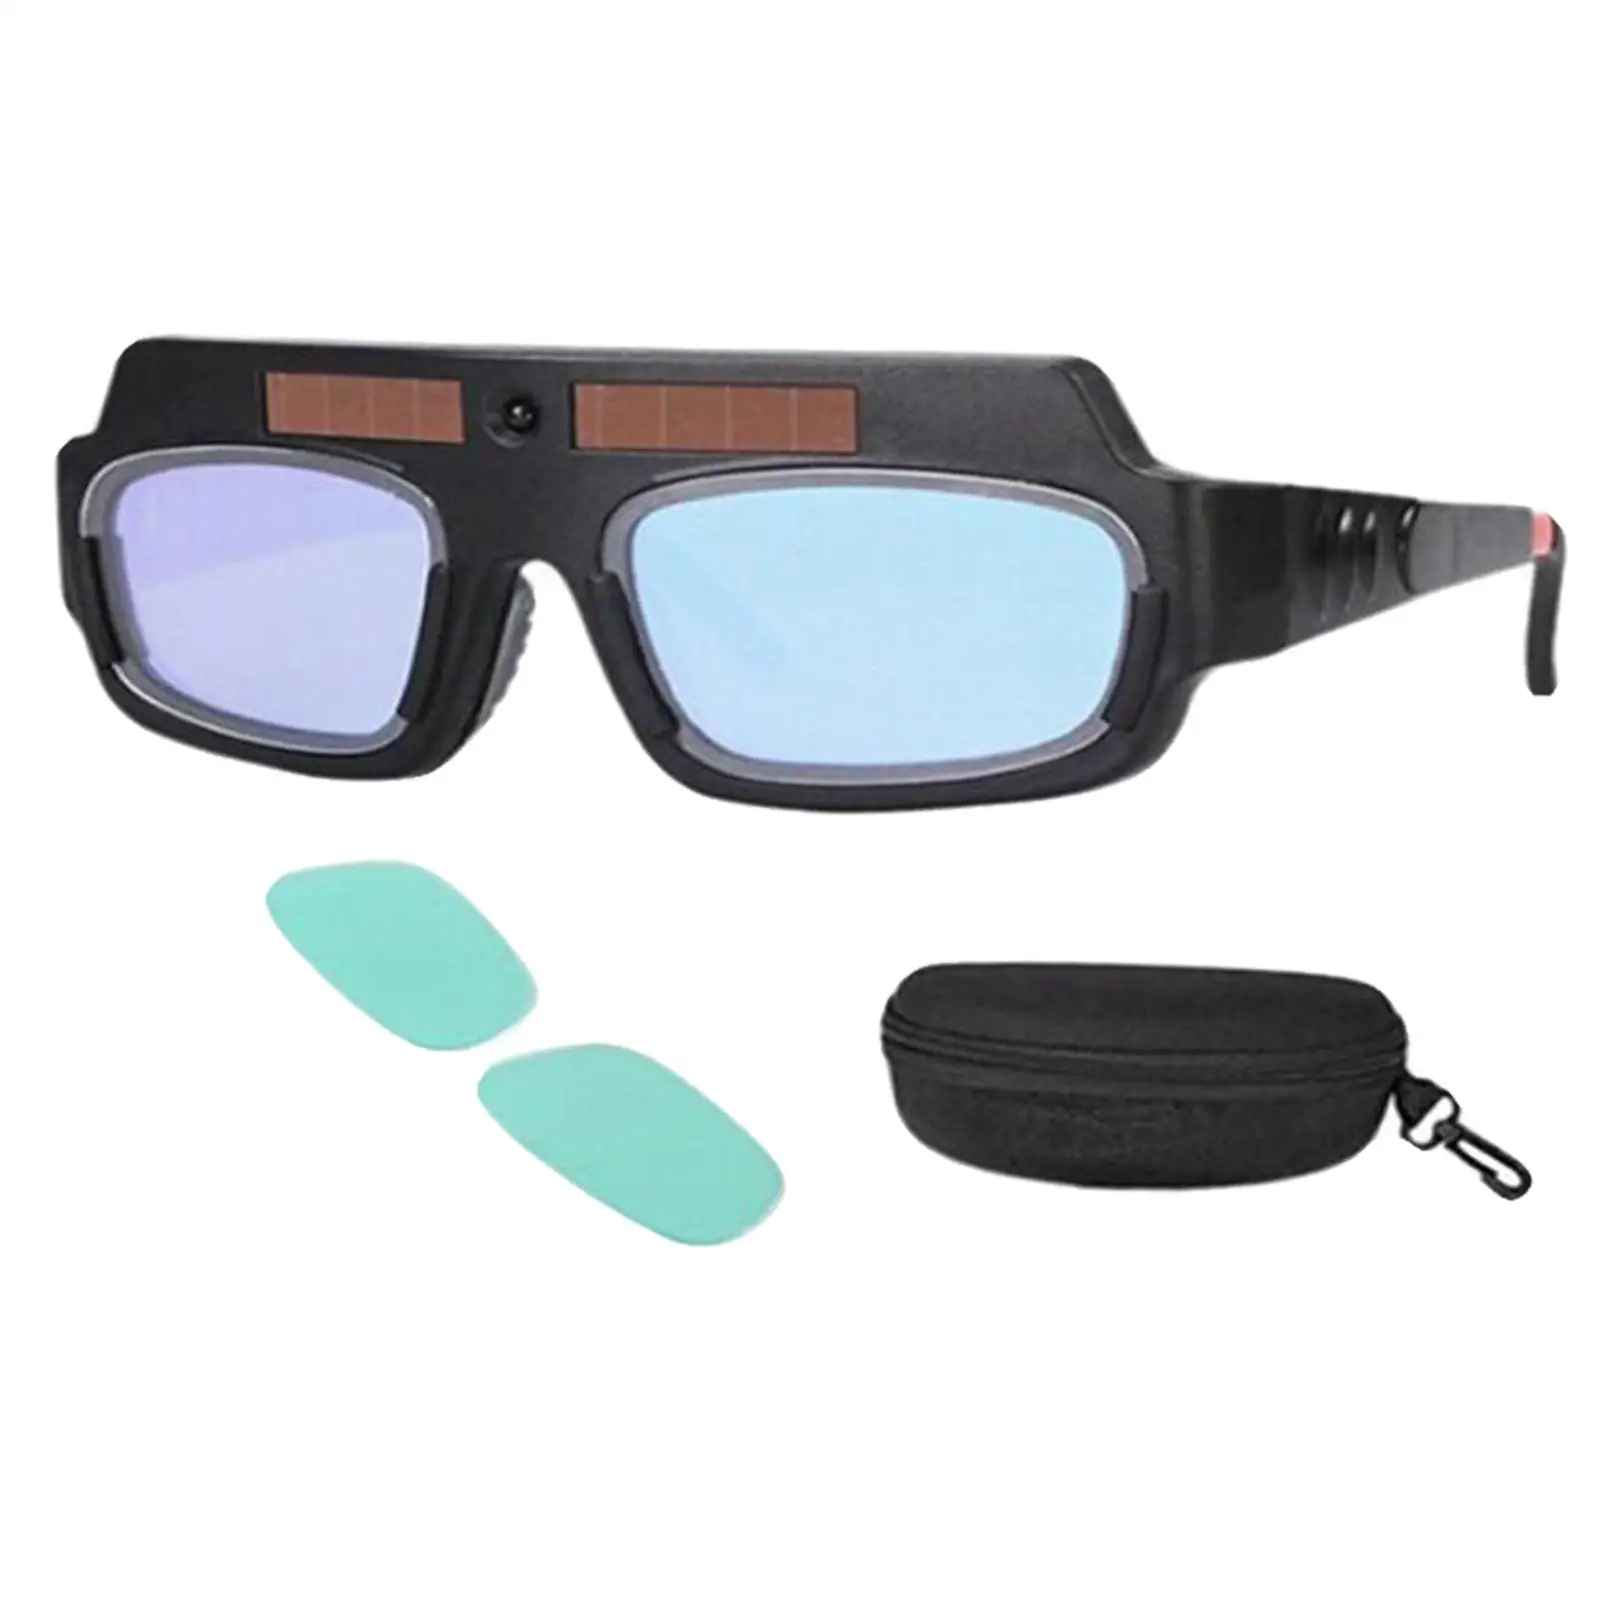 Auto Darkening Welding Goggles Solar Adjustable Shade Welding Helmet Welder Glasses Welder Mask Safety Eyes Glasses